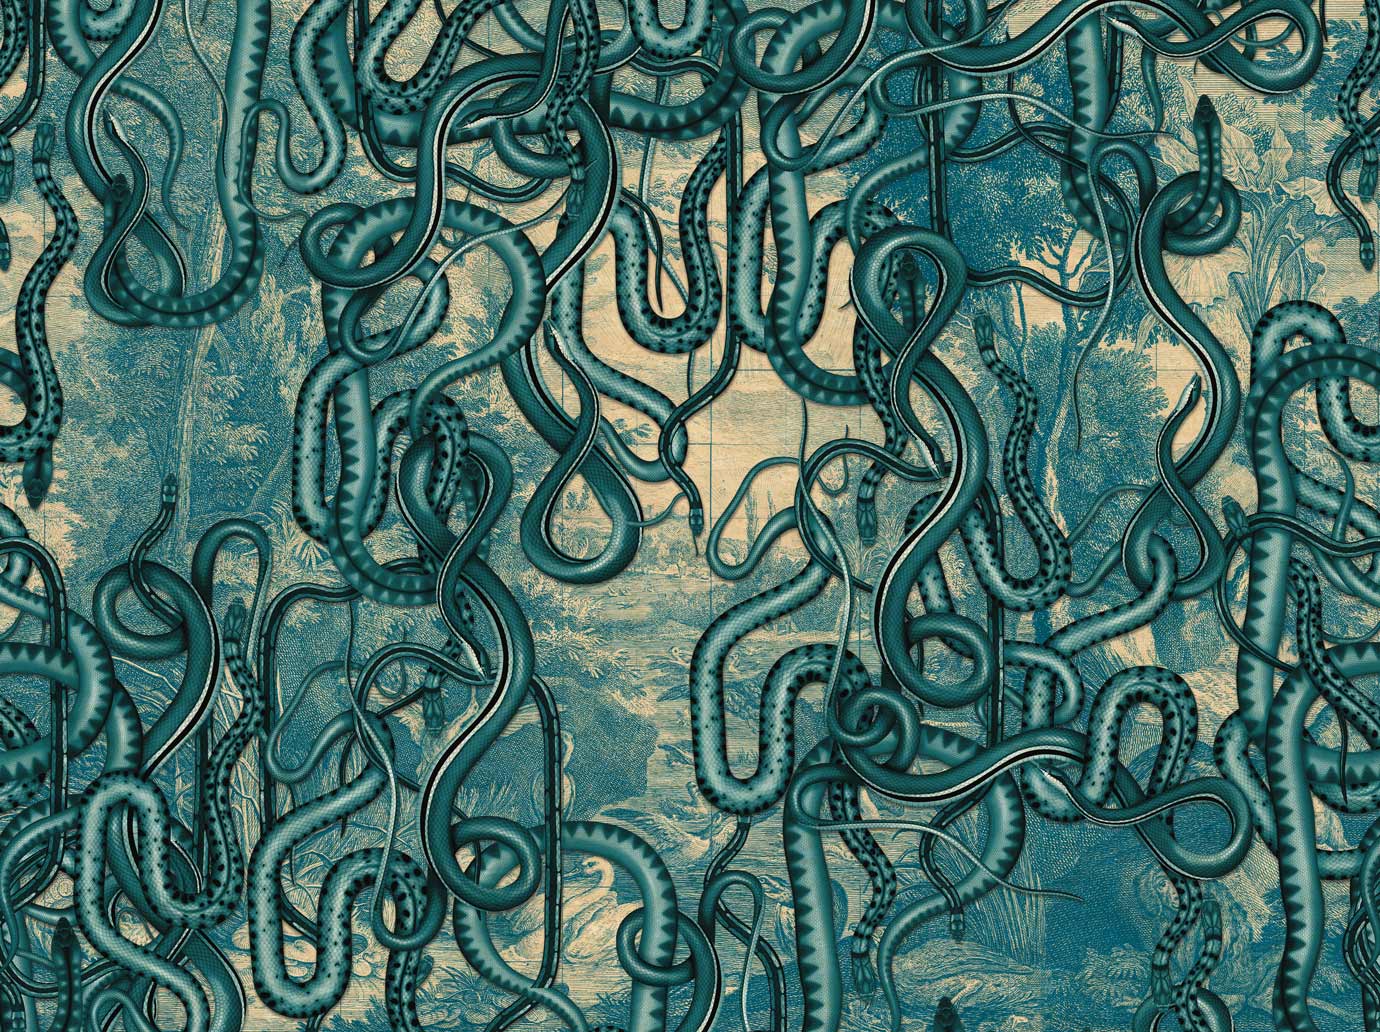 Serpents design in landscape format featuring weaving snakes against a garden of eden background